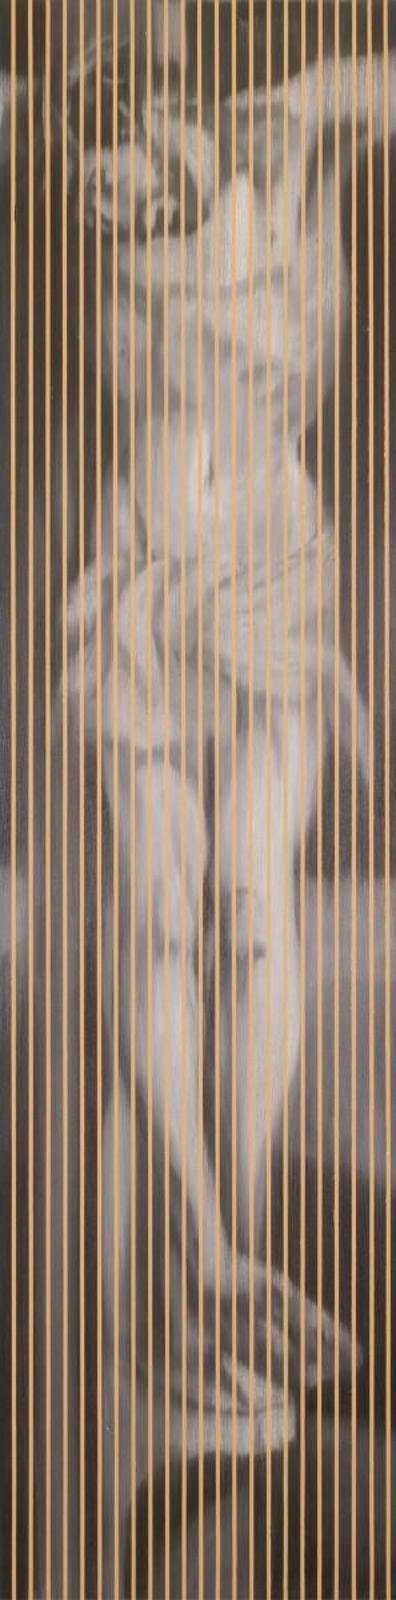 Chris Cran (1949) - Crucifixion (Stripe Paintings); 1989